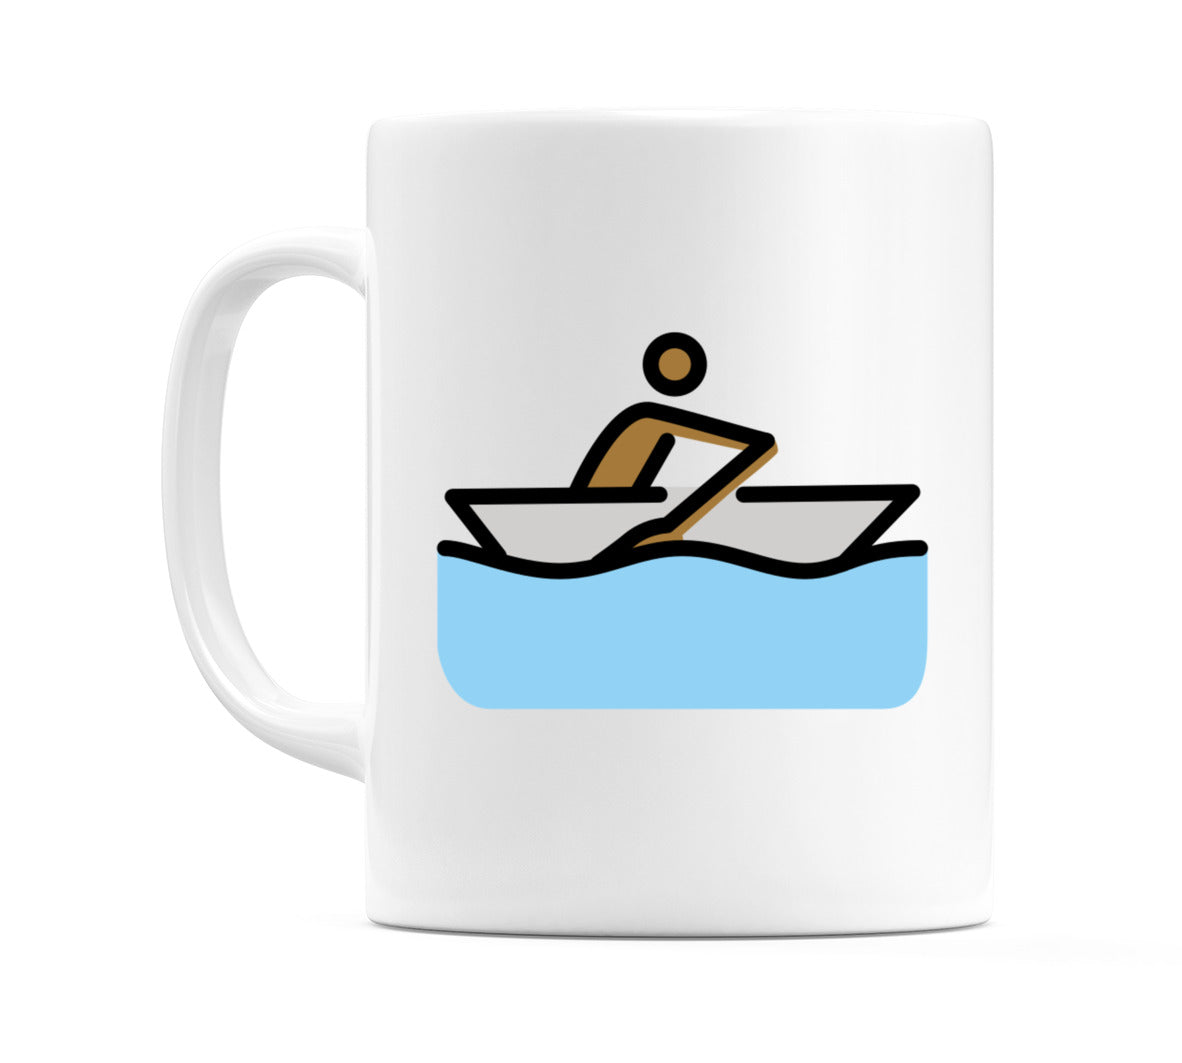 Male Rowing Boat: Medium-Dark Skin Tone Emoji Mug